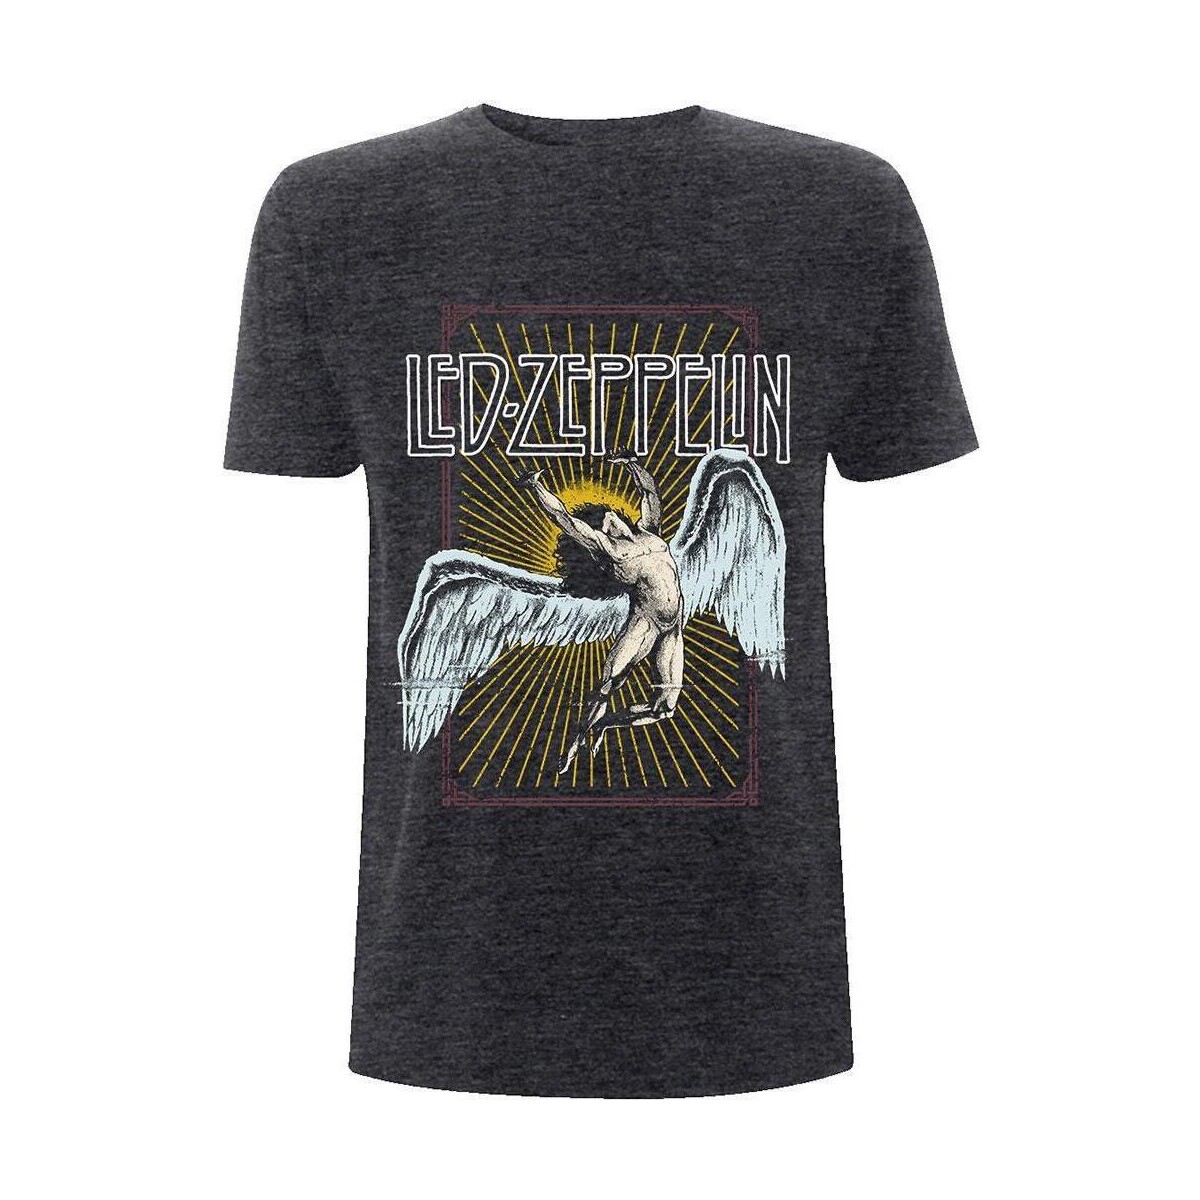 textil Camisetas manga larga Led Zeppelin Icarus Gris